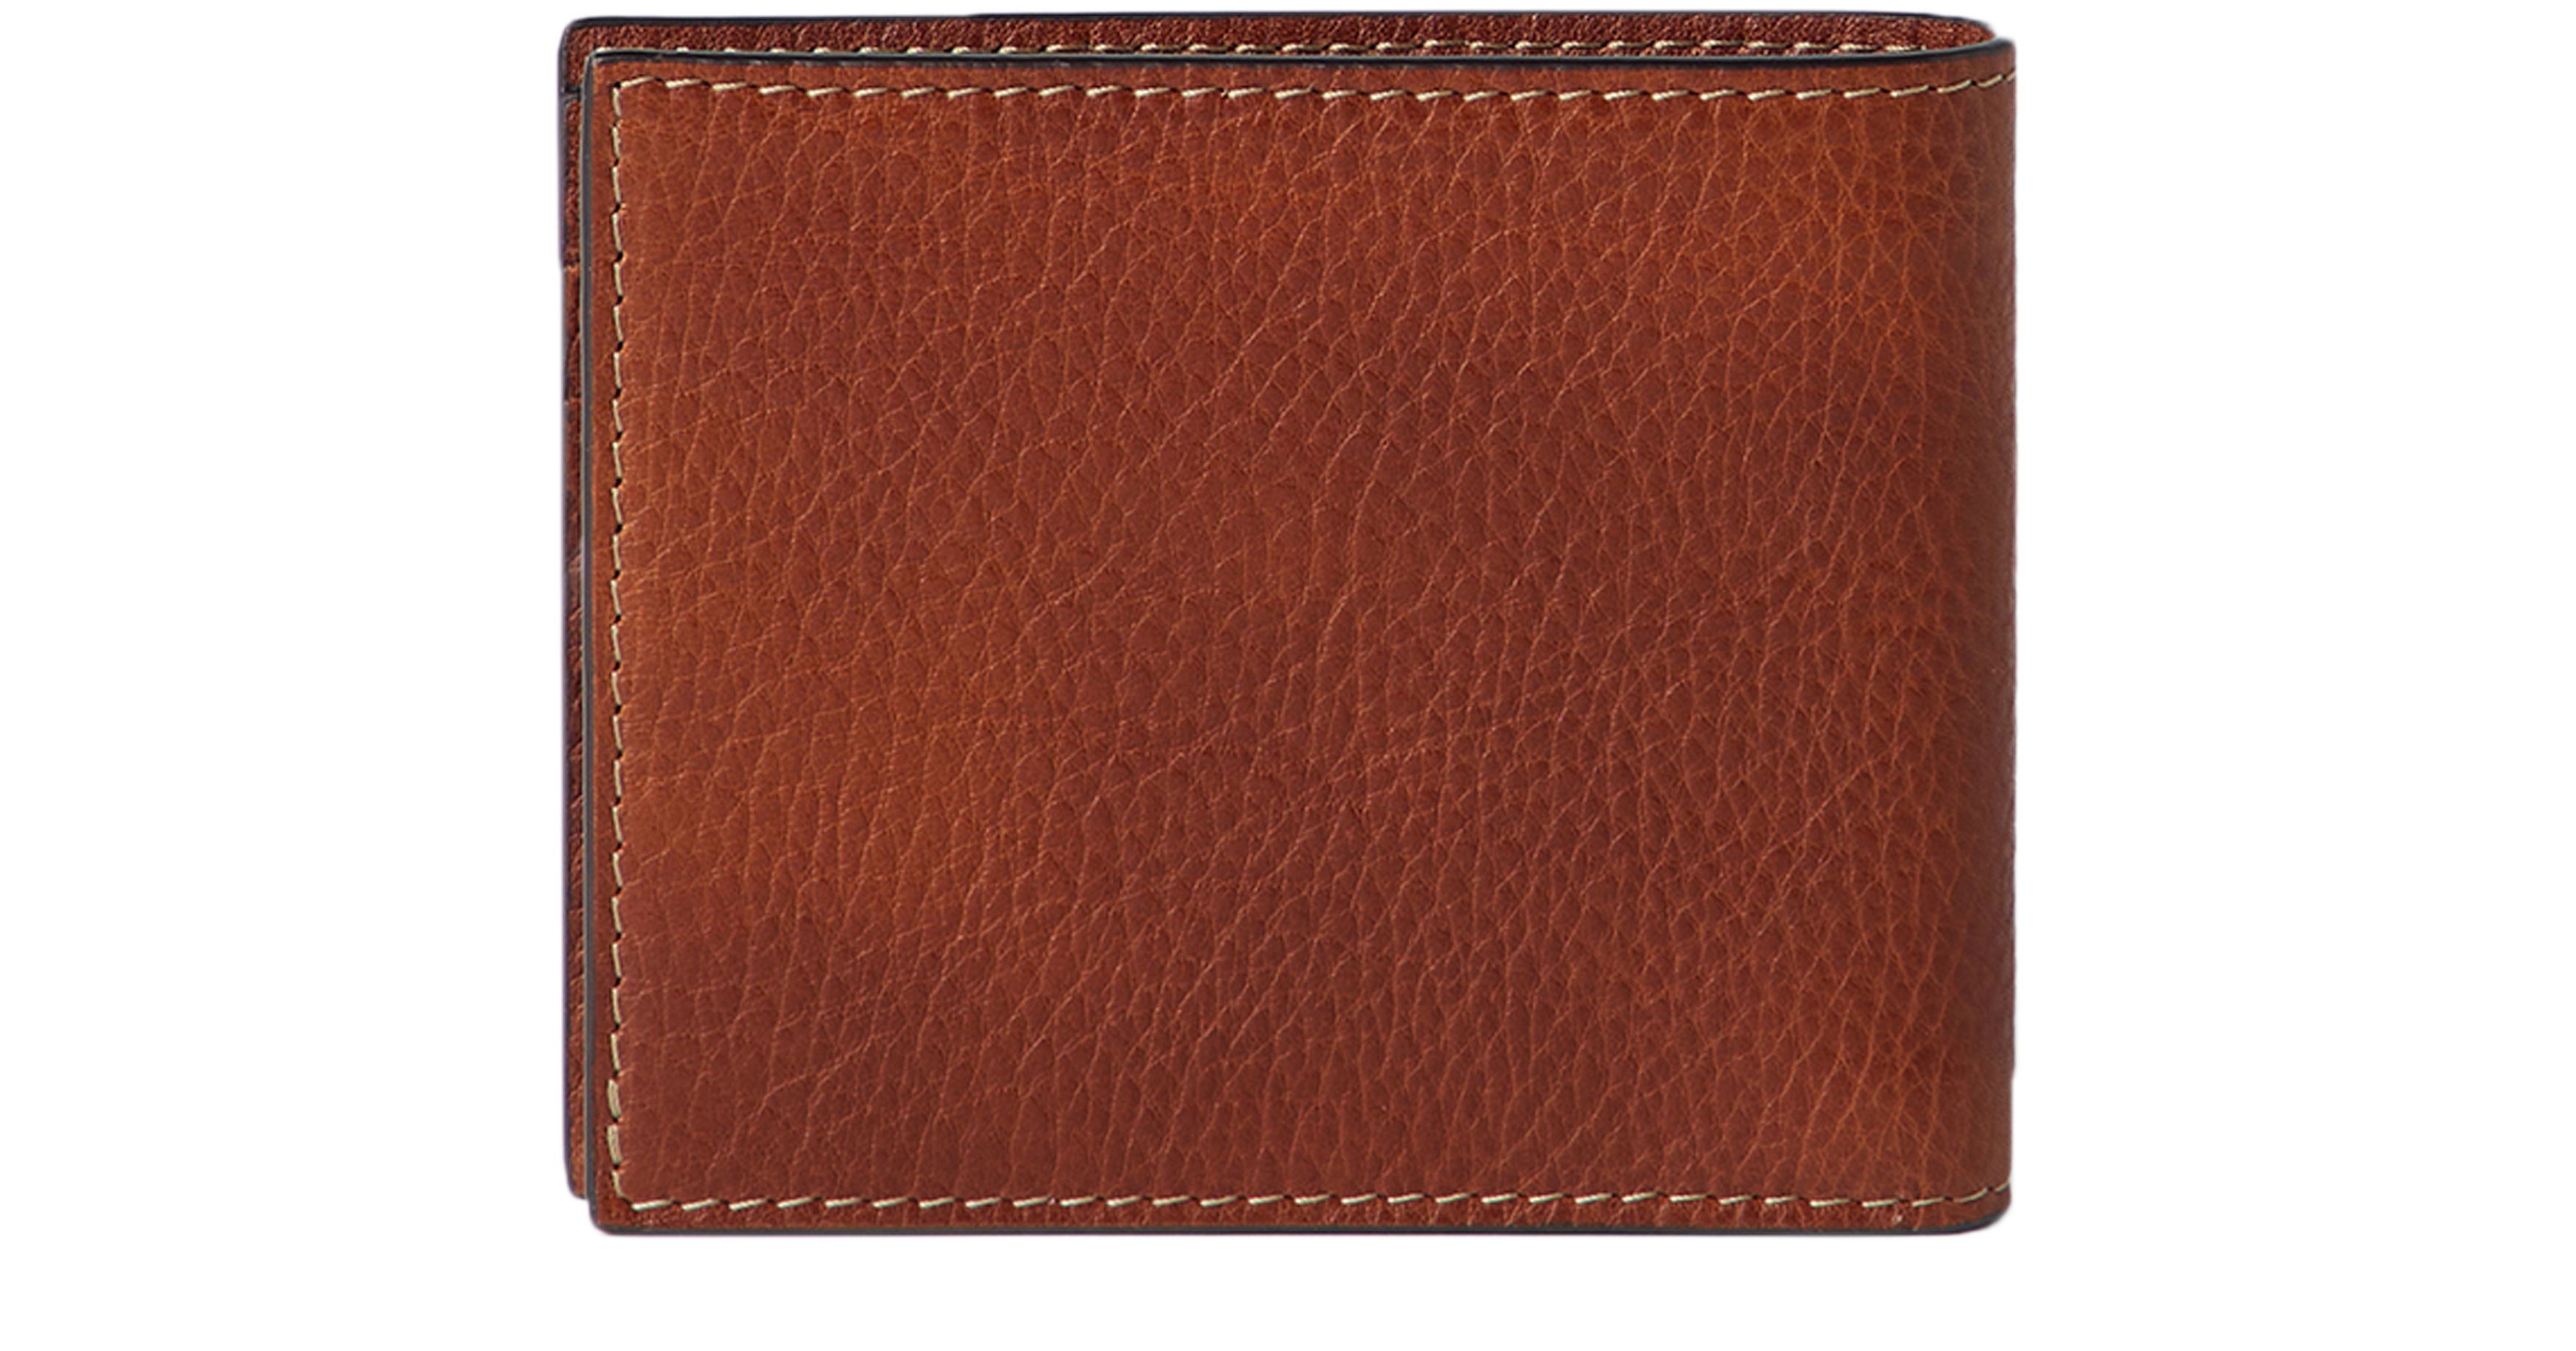 Brunello Cucinelli Leather wallet